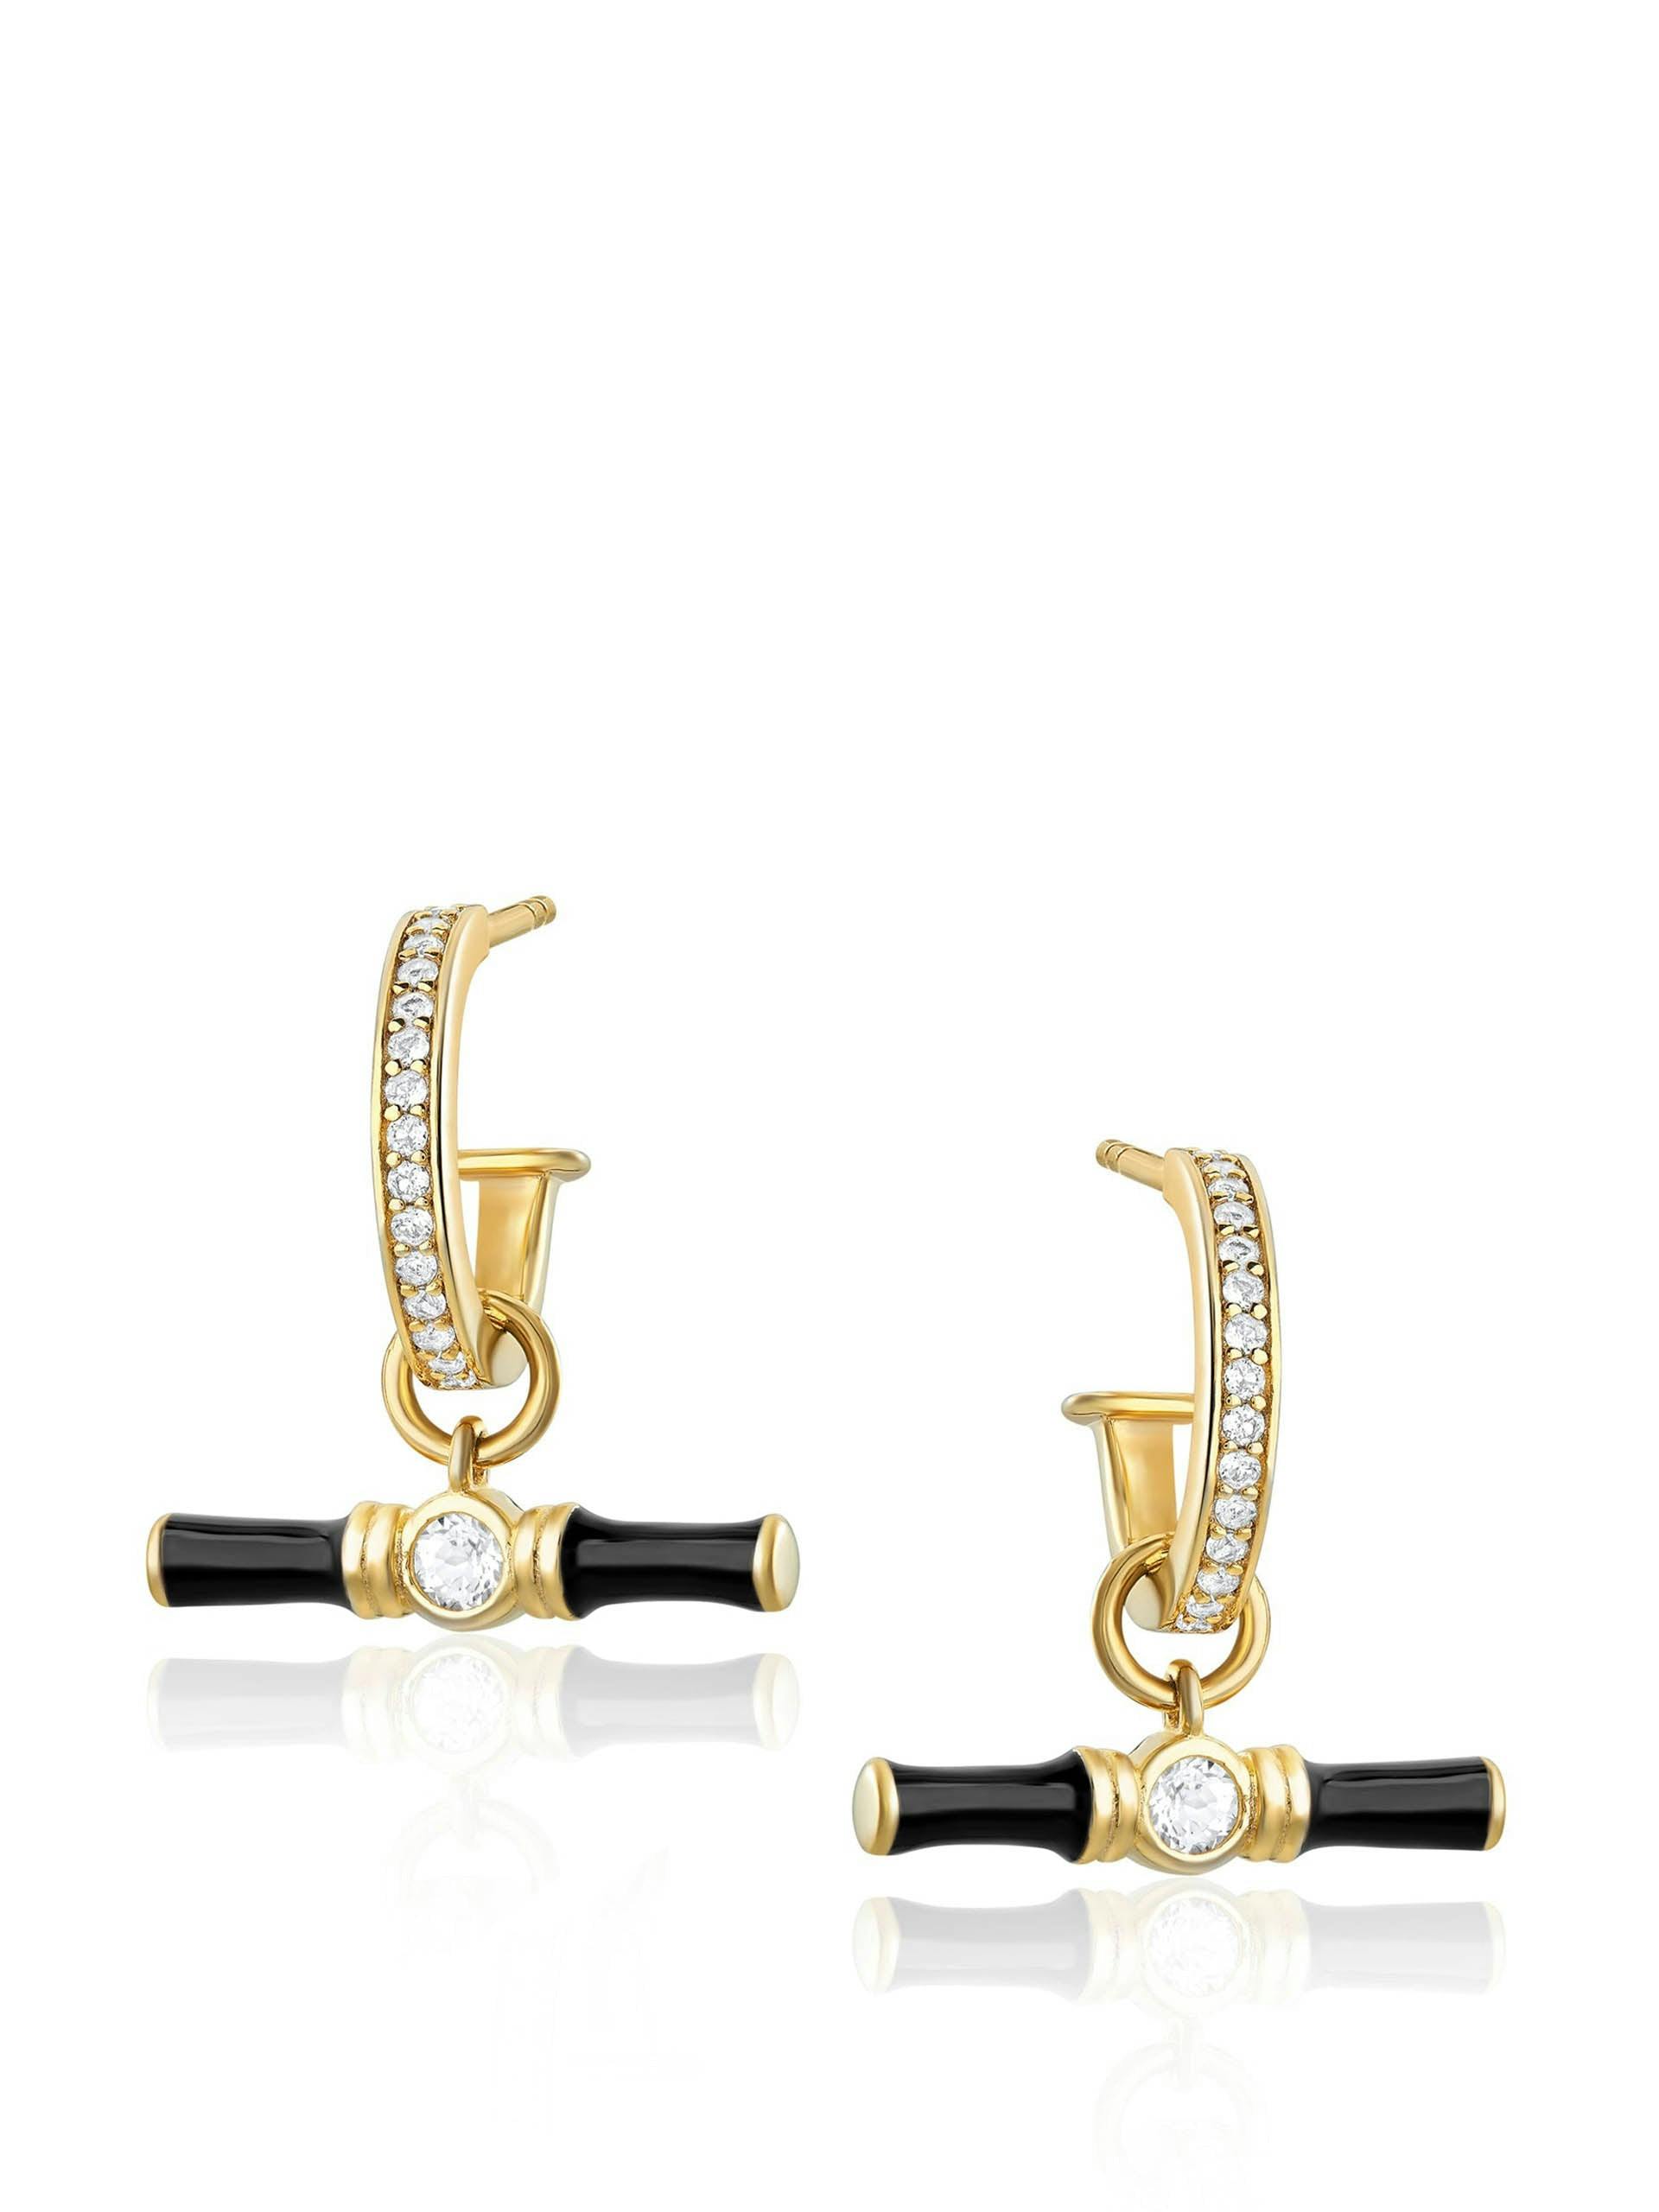 White topaz gold Dyllan hoop earrings with black enamel t-bar charms